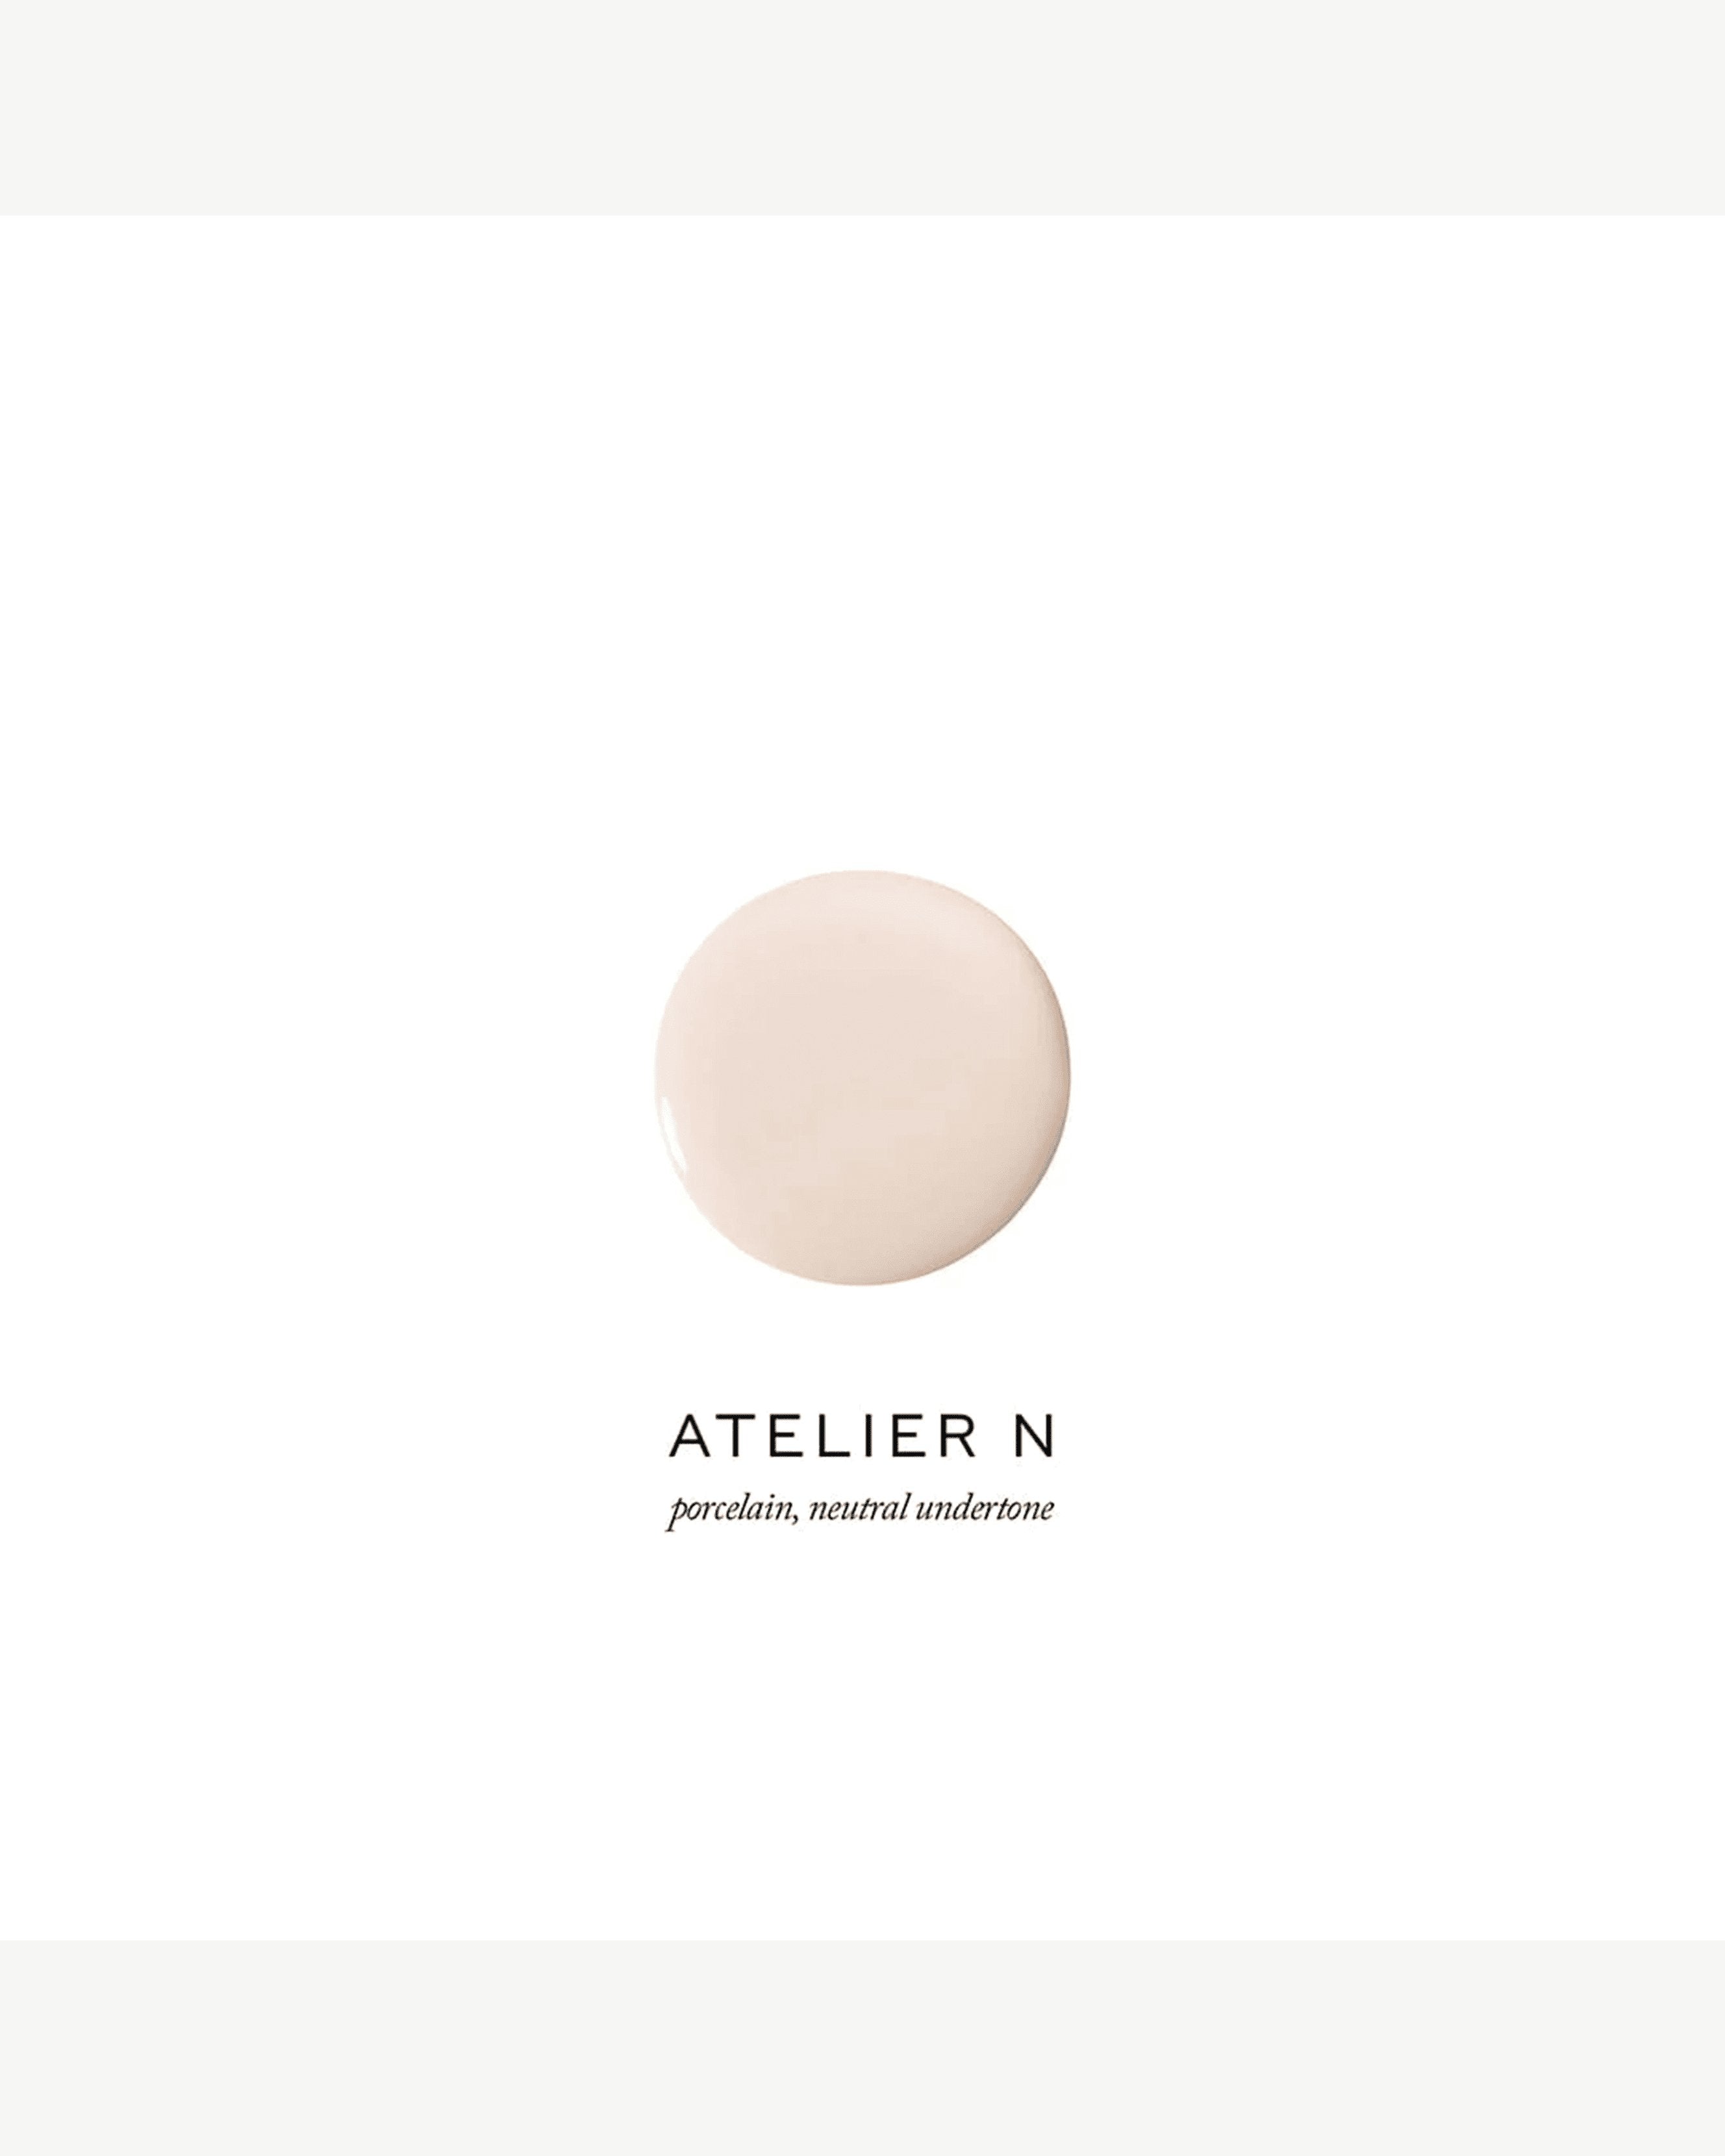 Atelier N (porcelain, cool neutral undertone)